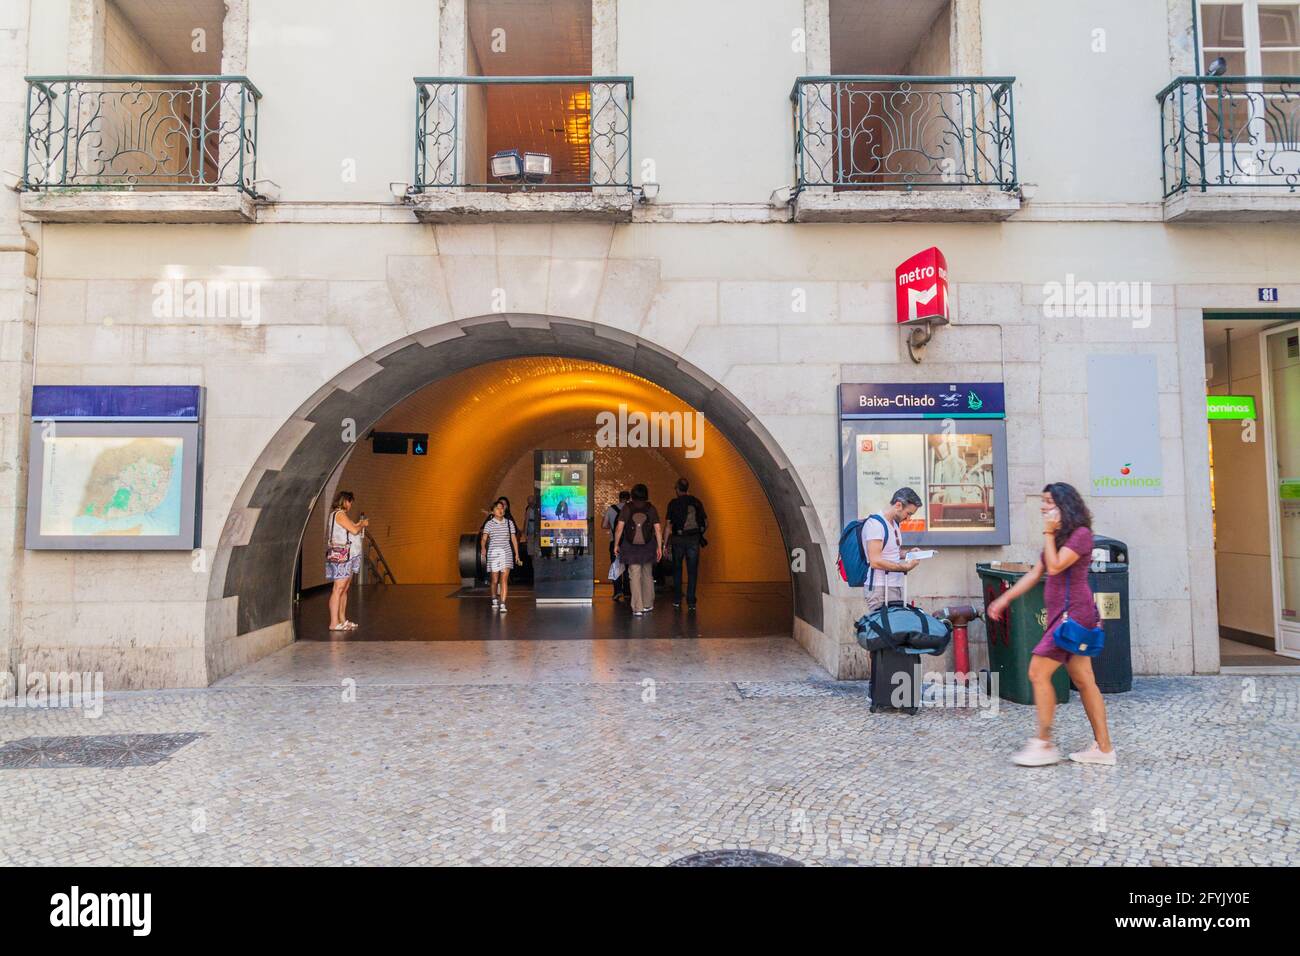 LISBON, PORTUGAL - OCTOBER 8, 2017: Entrance of the Baixa-Chiado metro station in Lisbon, Portugal Stock Photo